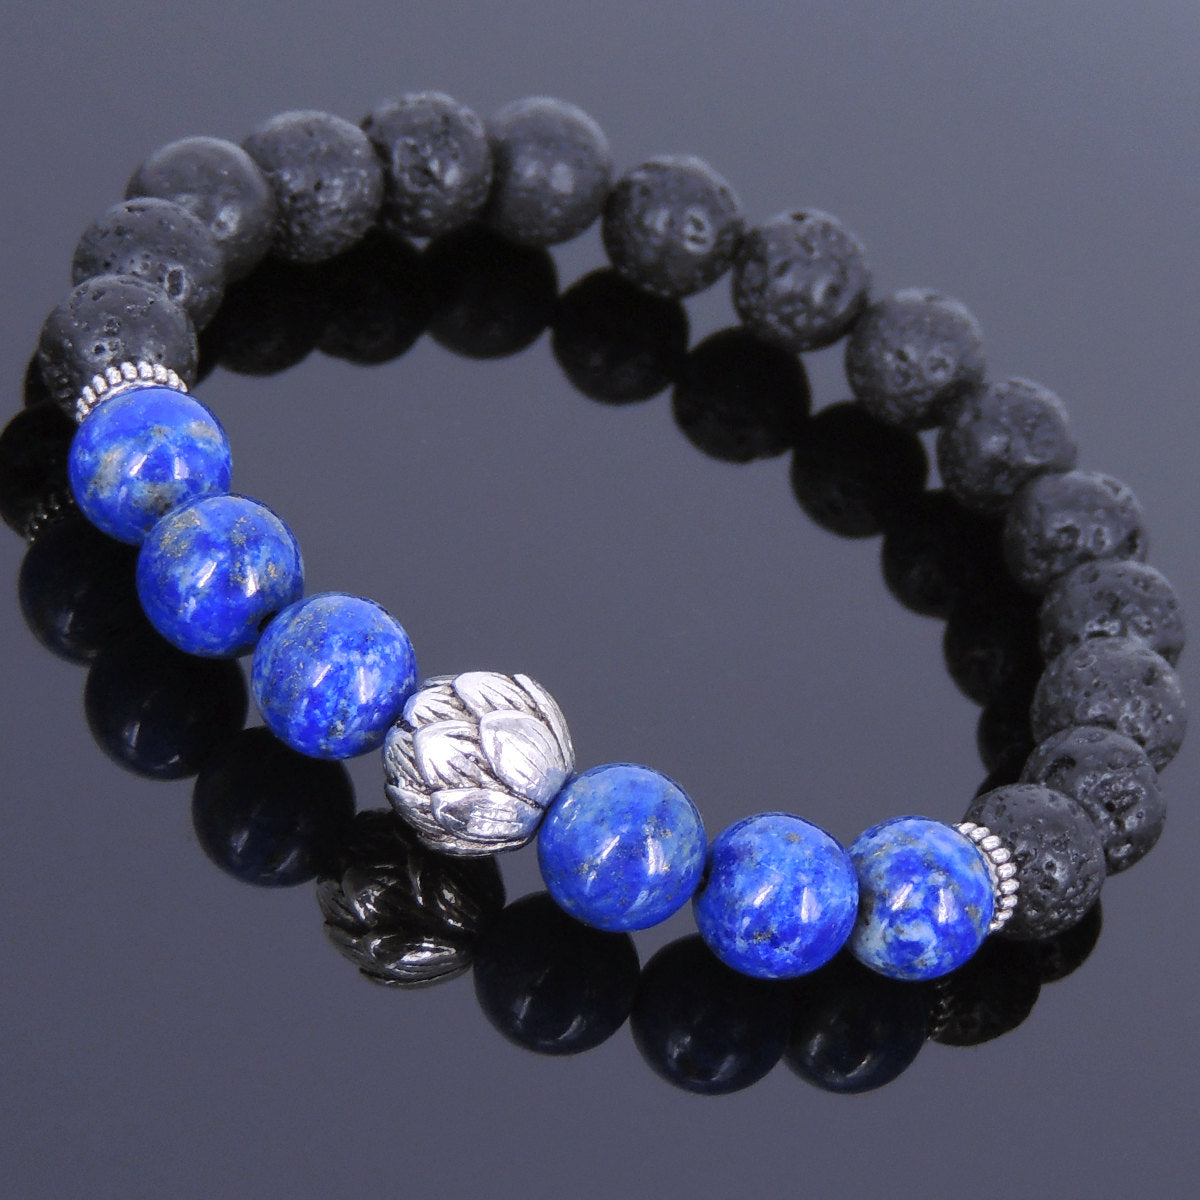 8mm Lapis Lazuli & Lava Rock Healing Stone Bracelet with Tibetan Silver Lotus Bead & Spacers - Handmade by Gem & Silver TSB074